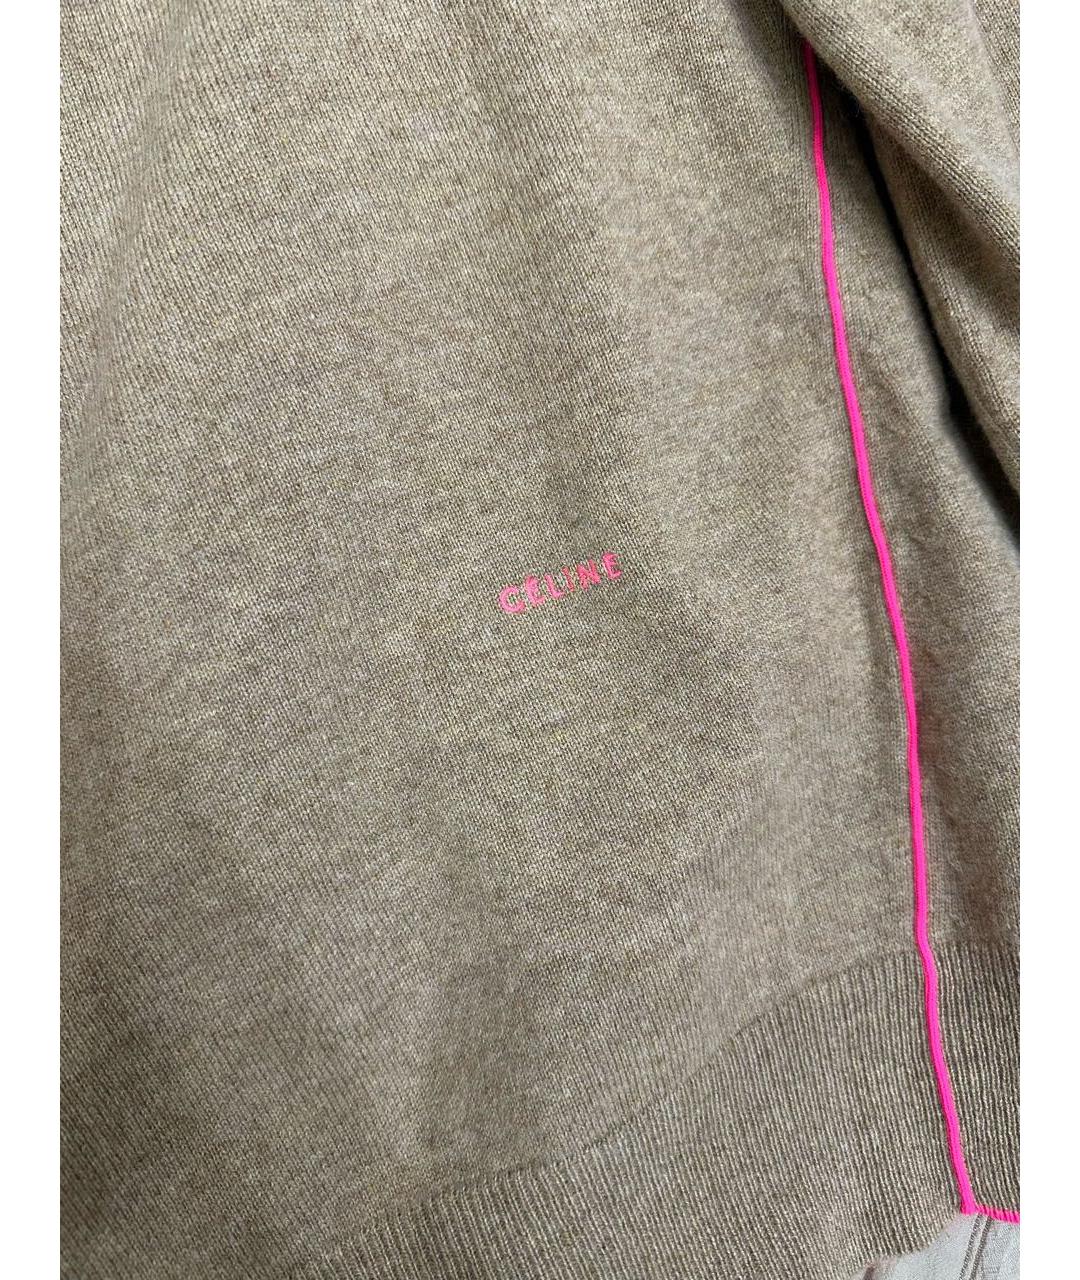 CELINE PRE-OWNED Бежевый кашемировый джемпер / свитер, фото 4